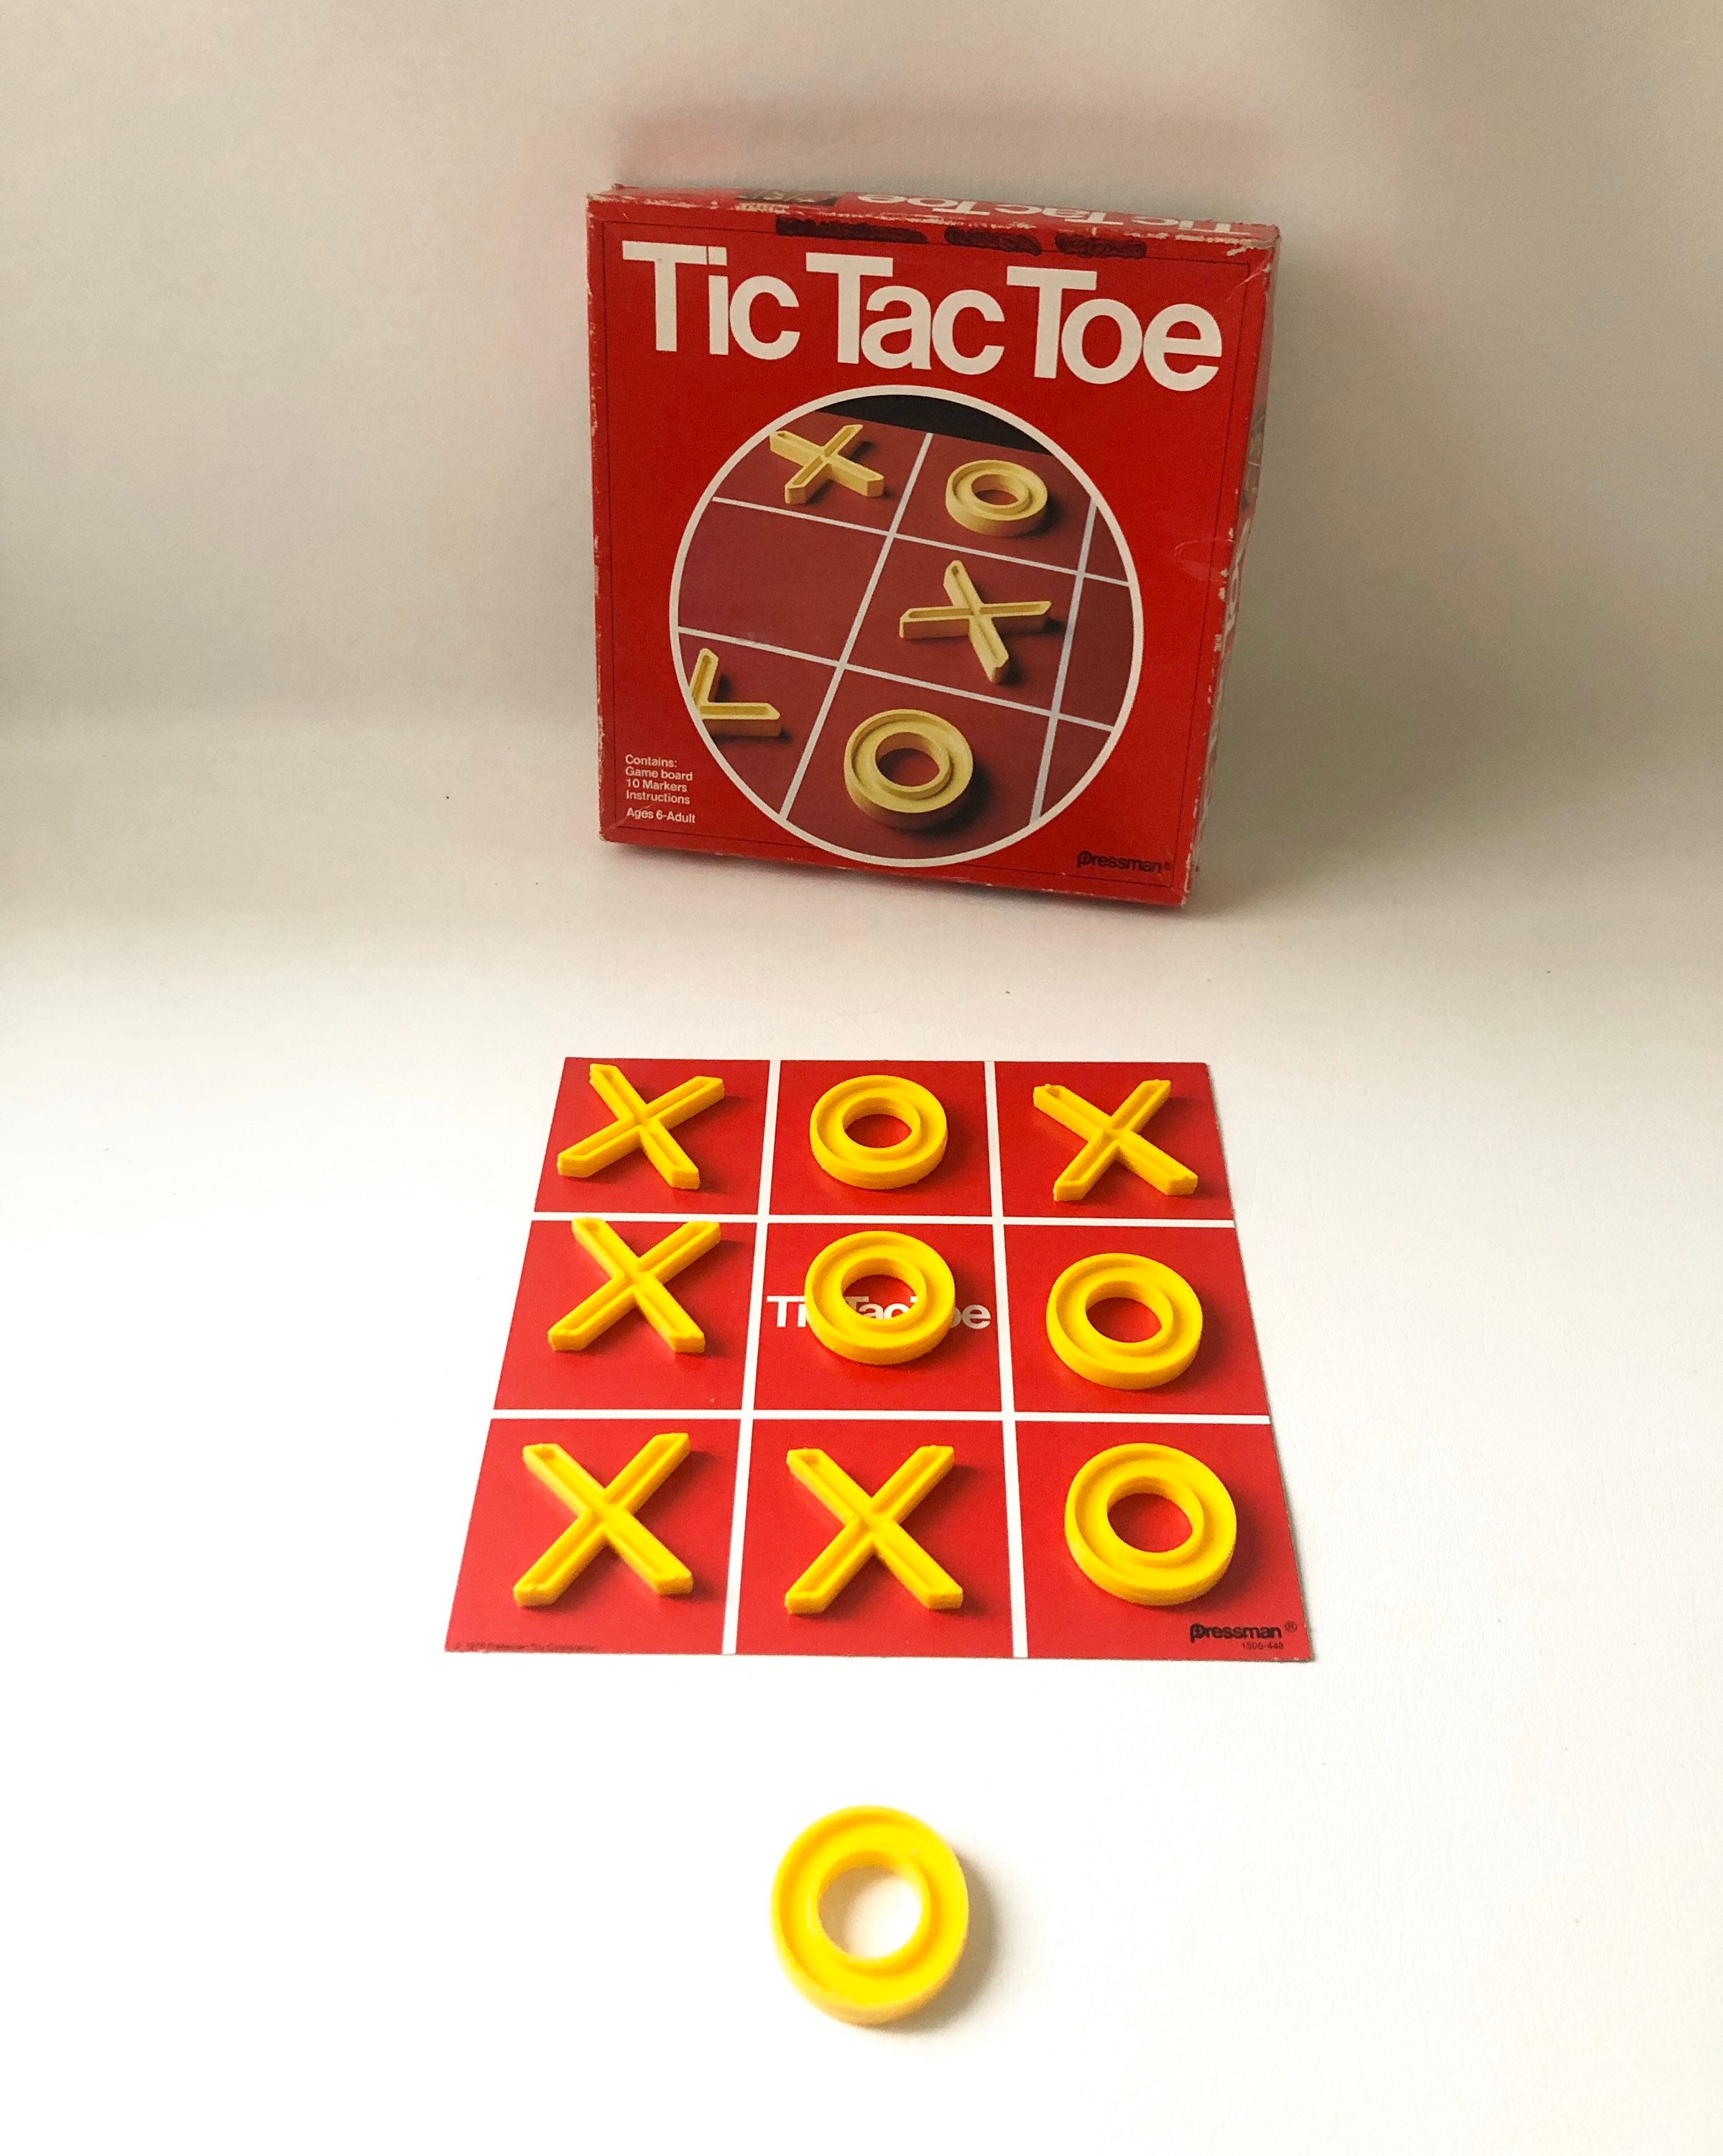 Pressman, Tic Tac Toe Board Game